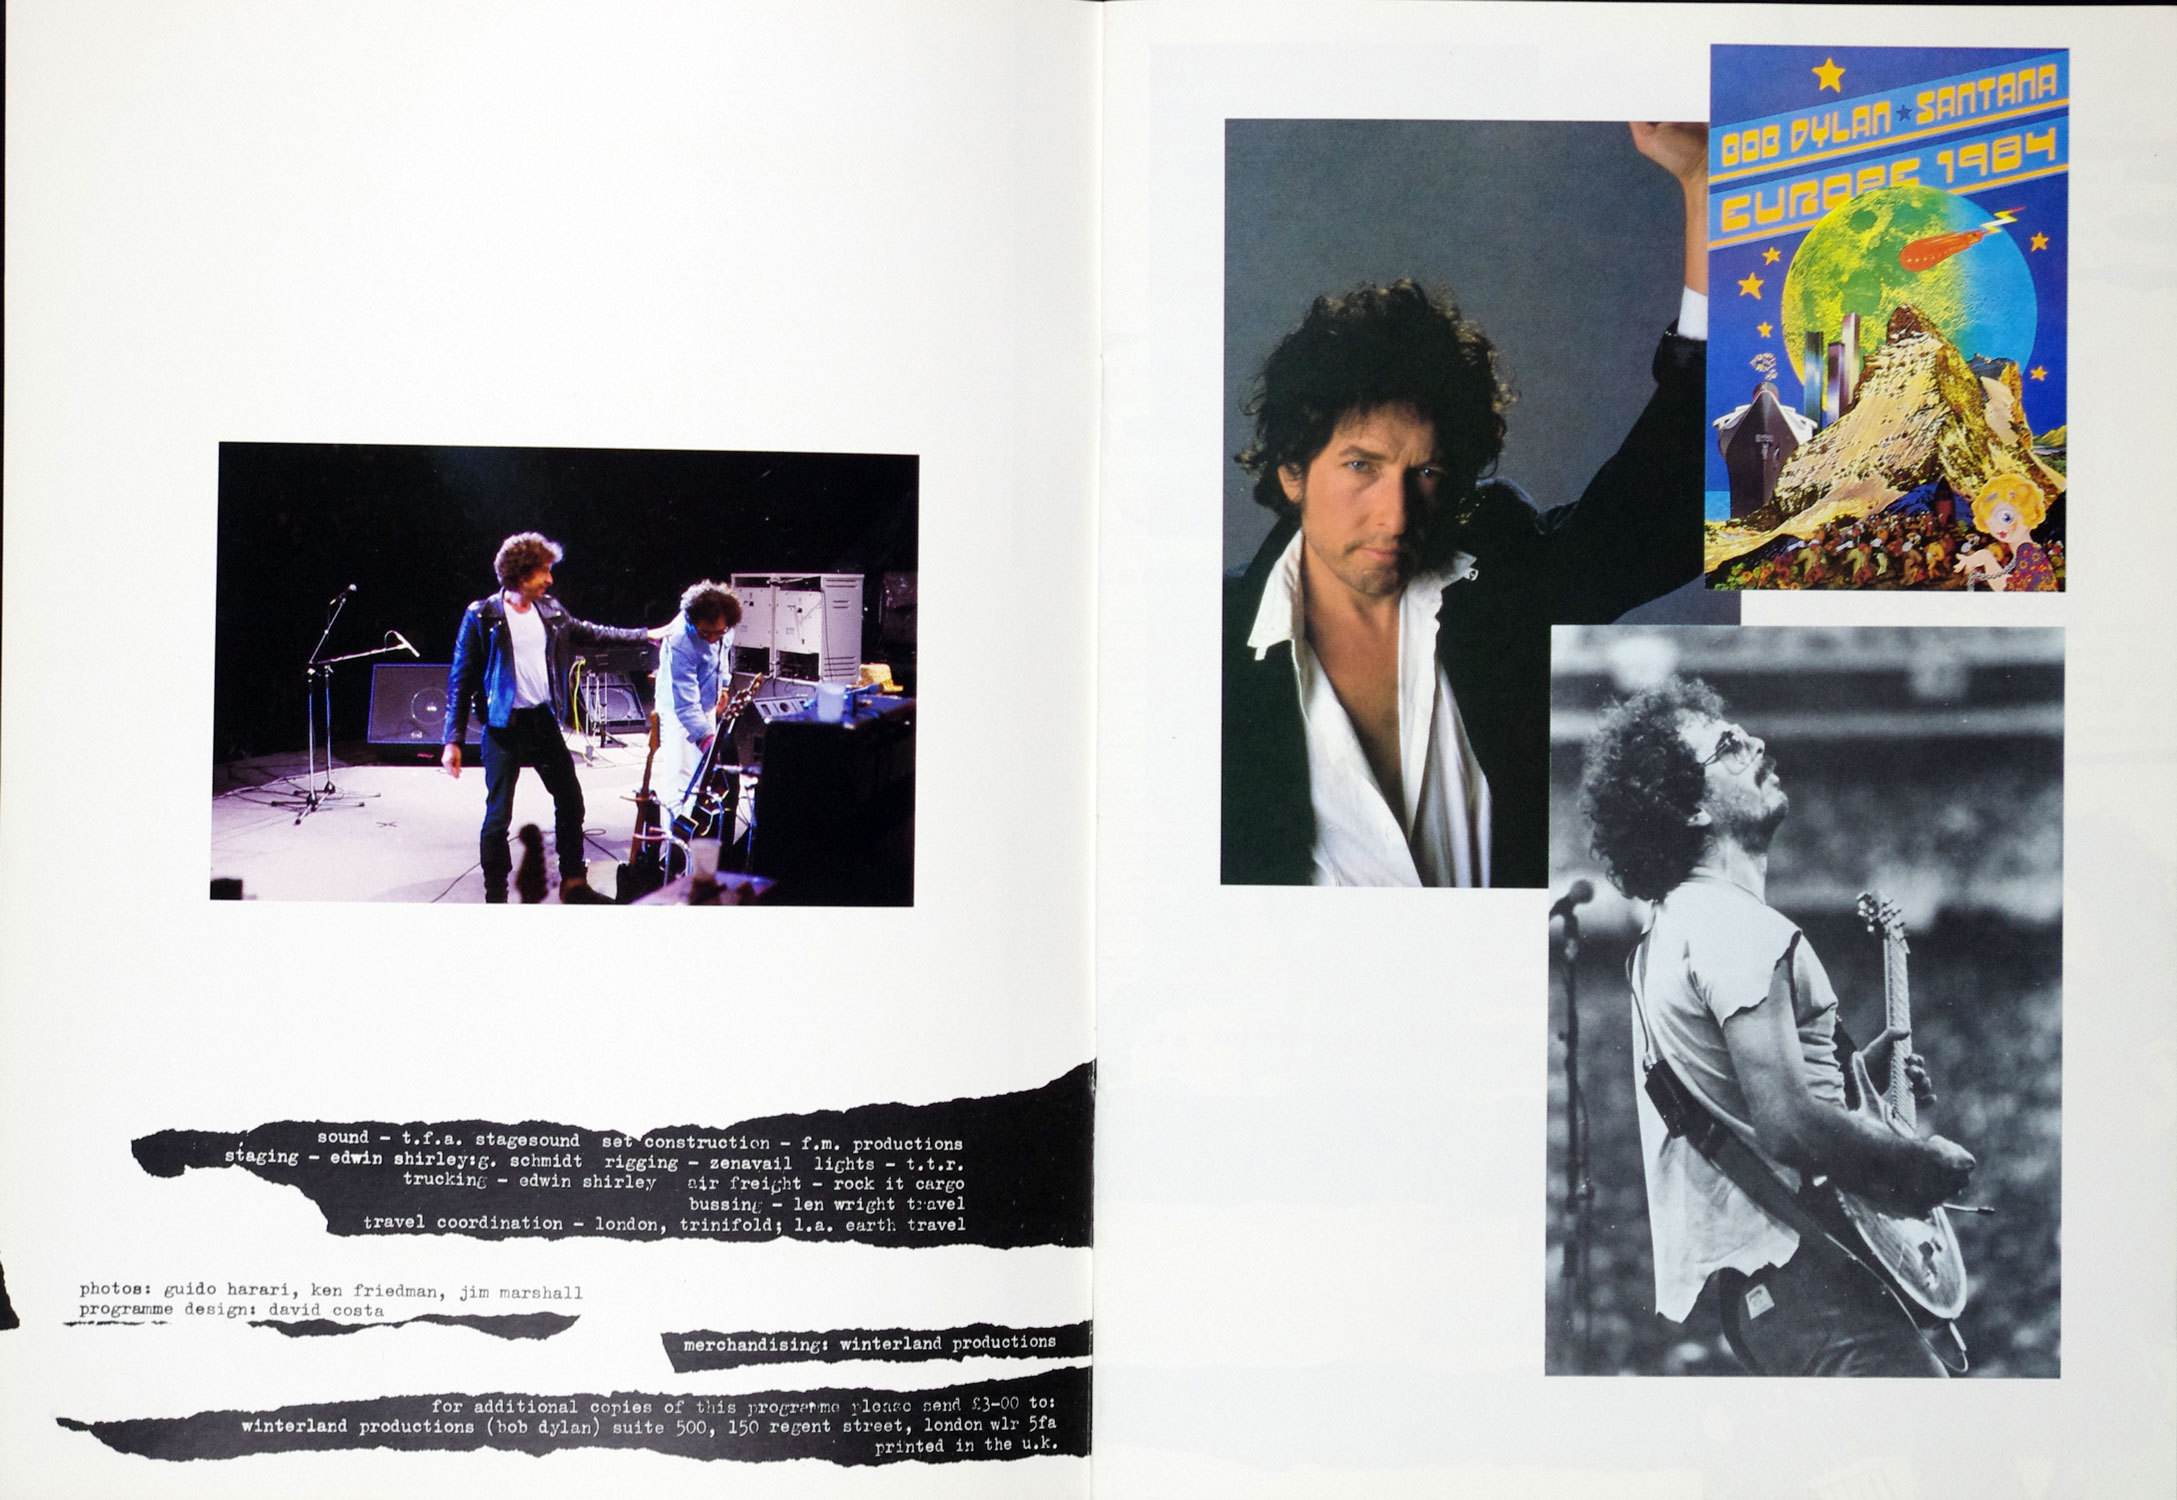 Bob Dylan Santana 1984 Europe Tour Program